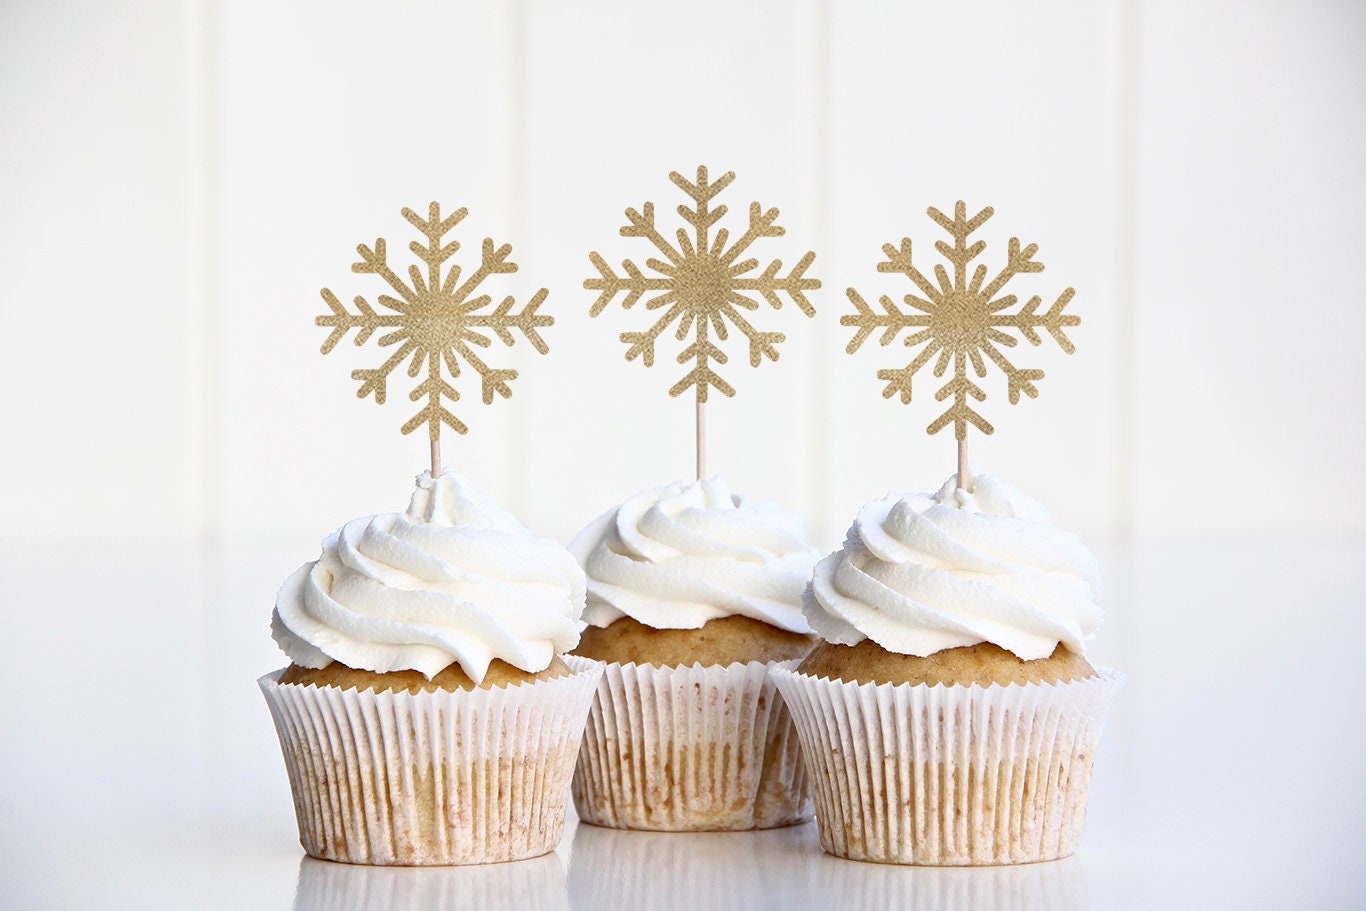 28-30 Edible Sugar Fondant Snowflakes Birthday Cake Cupcake